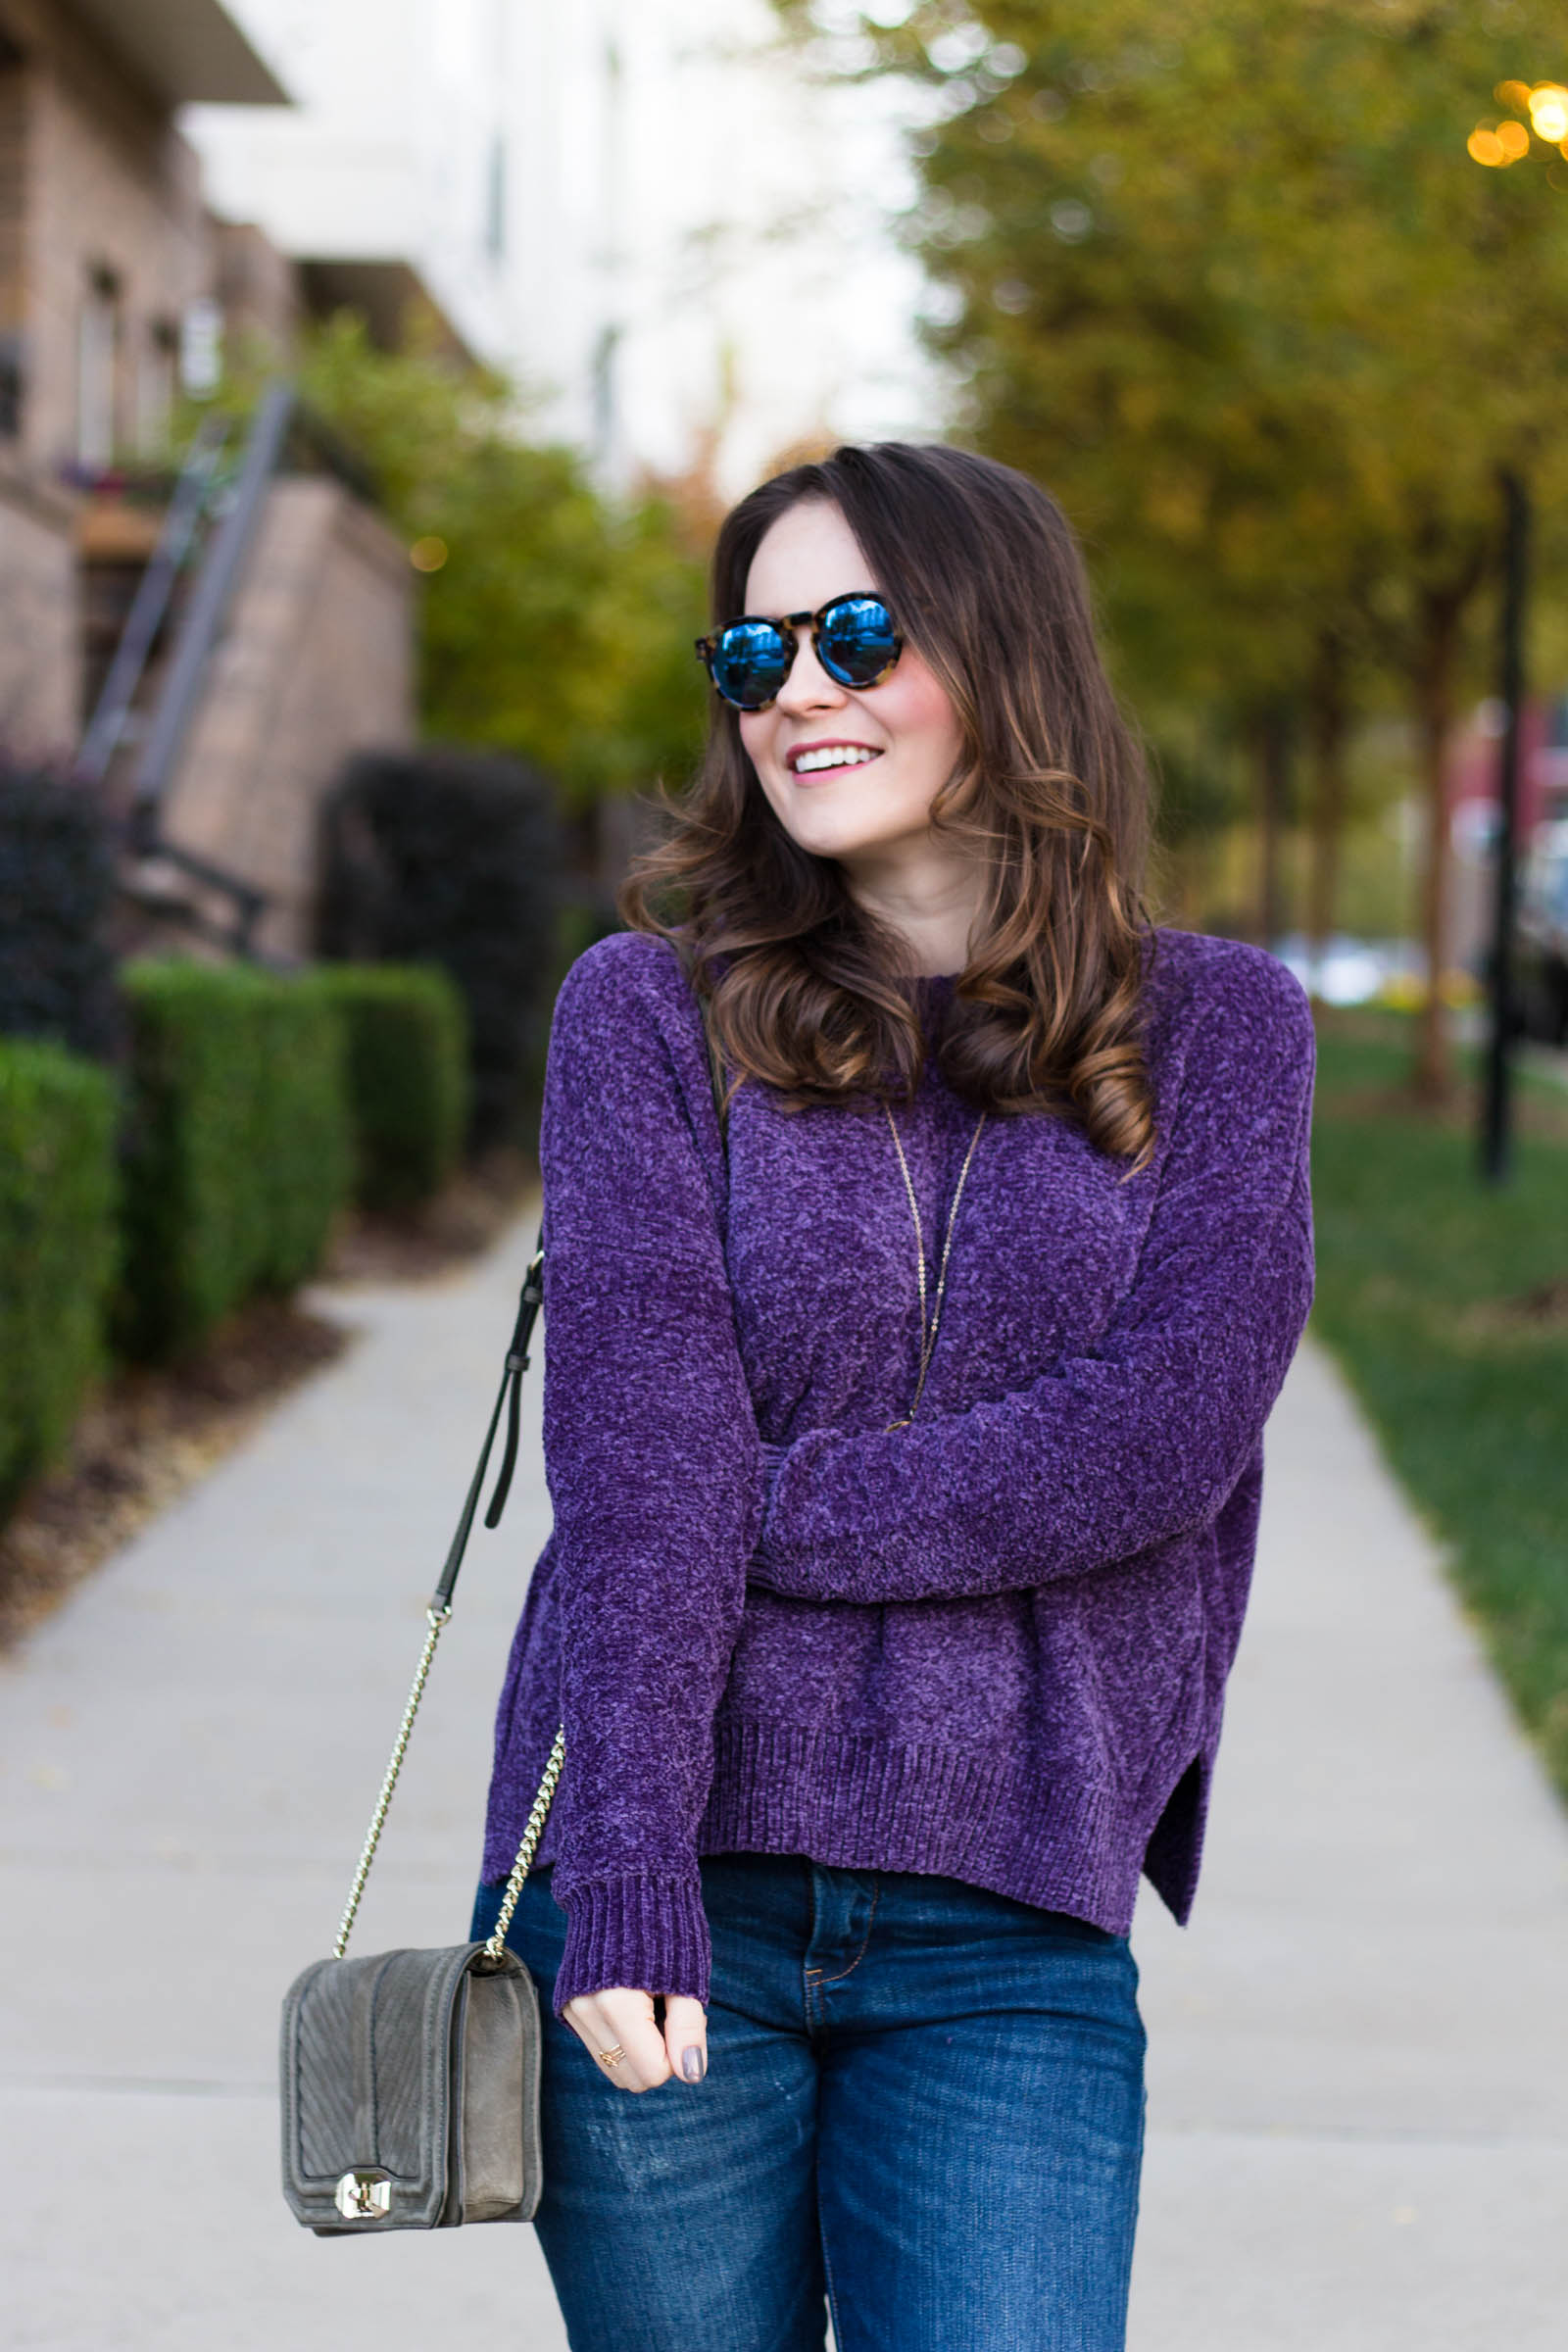 Purple Chenille Sweater - Medicine & Manicures